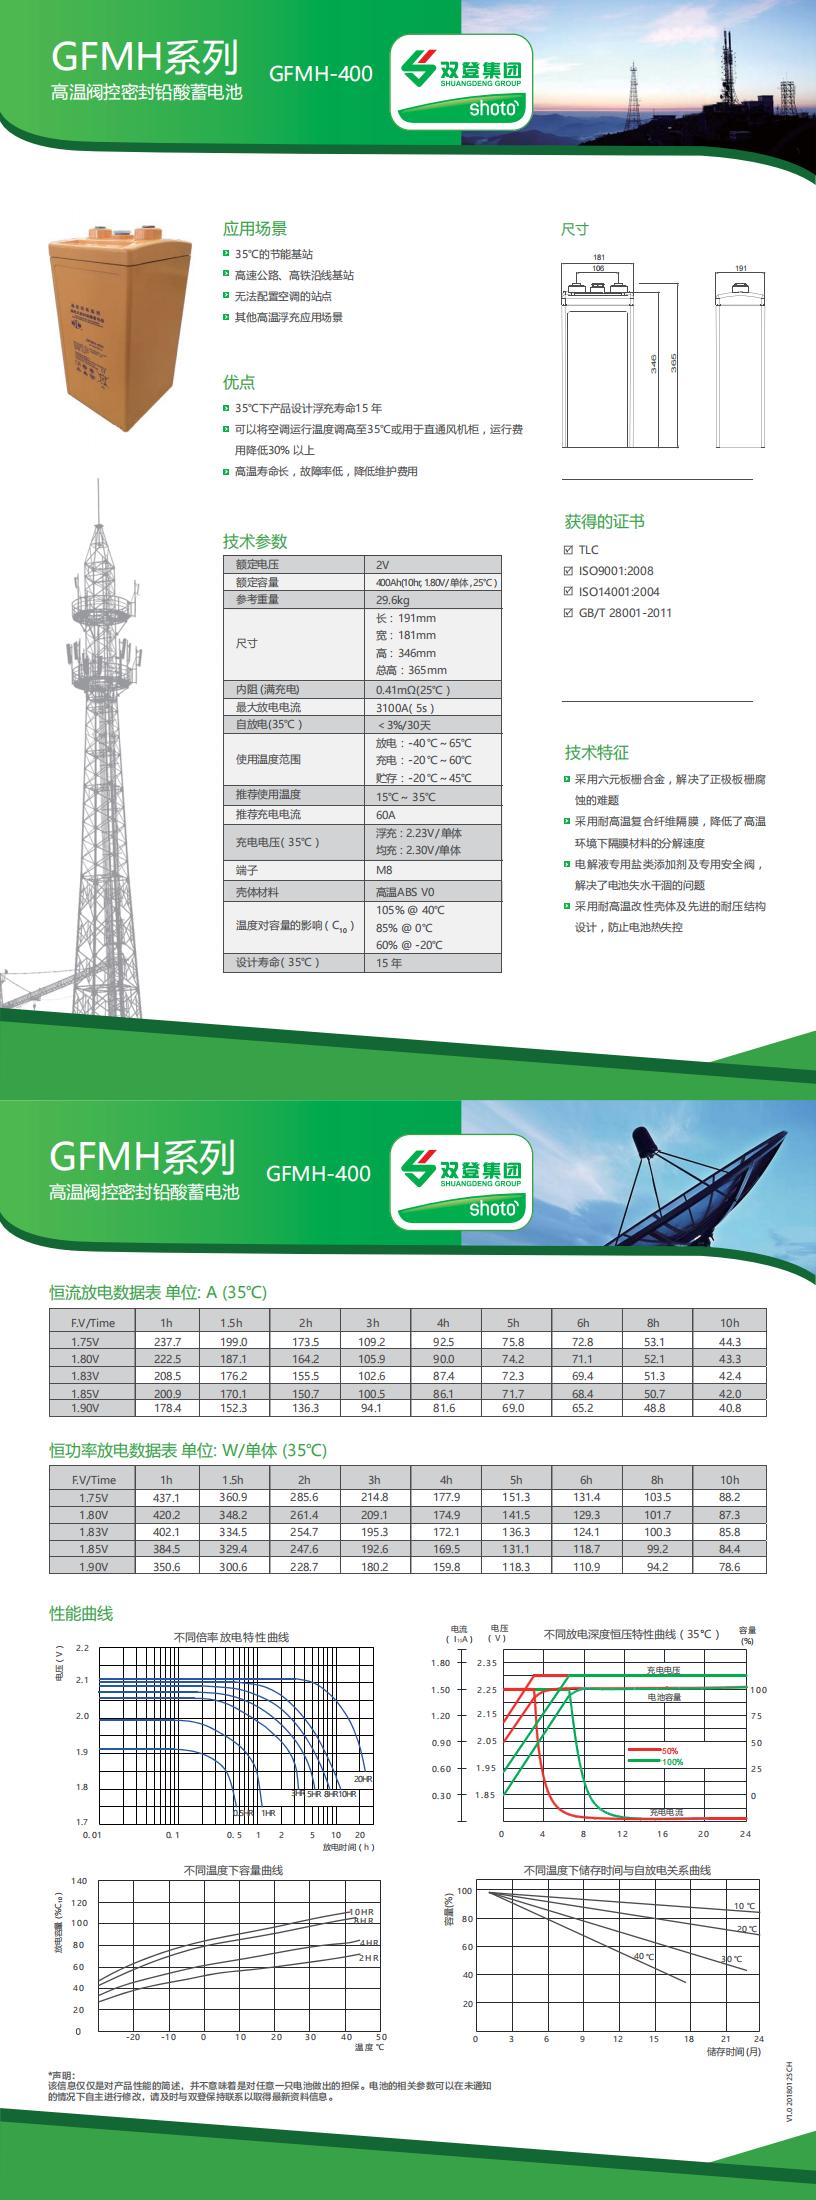 GFMH-400中文_00.jpg